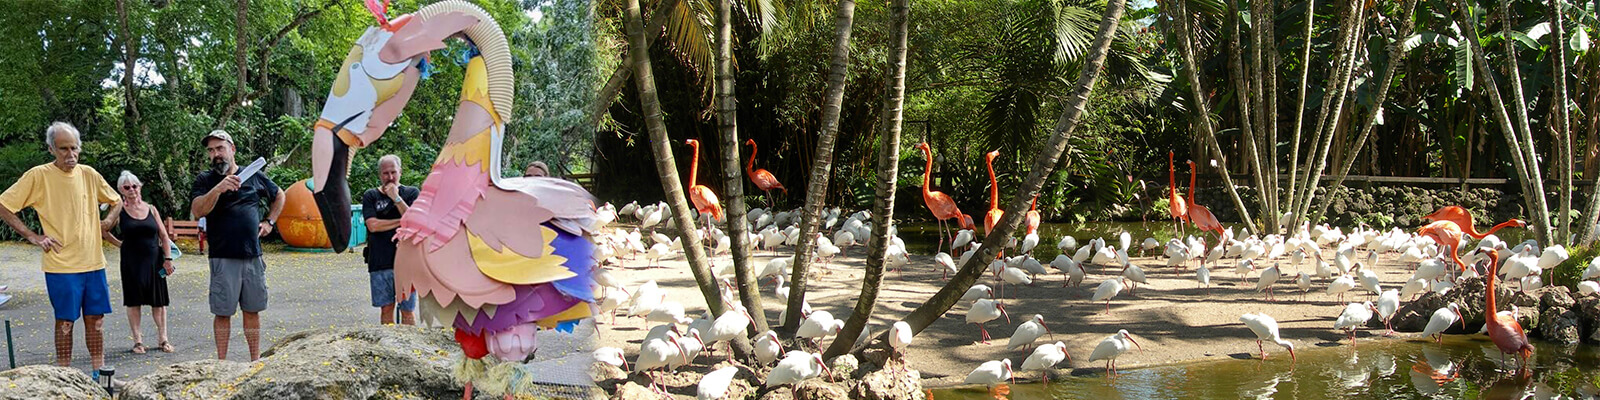 Flamingo Gardens Fort Lauderdale Coupon